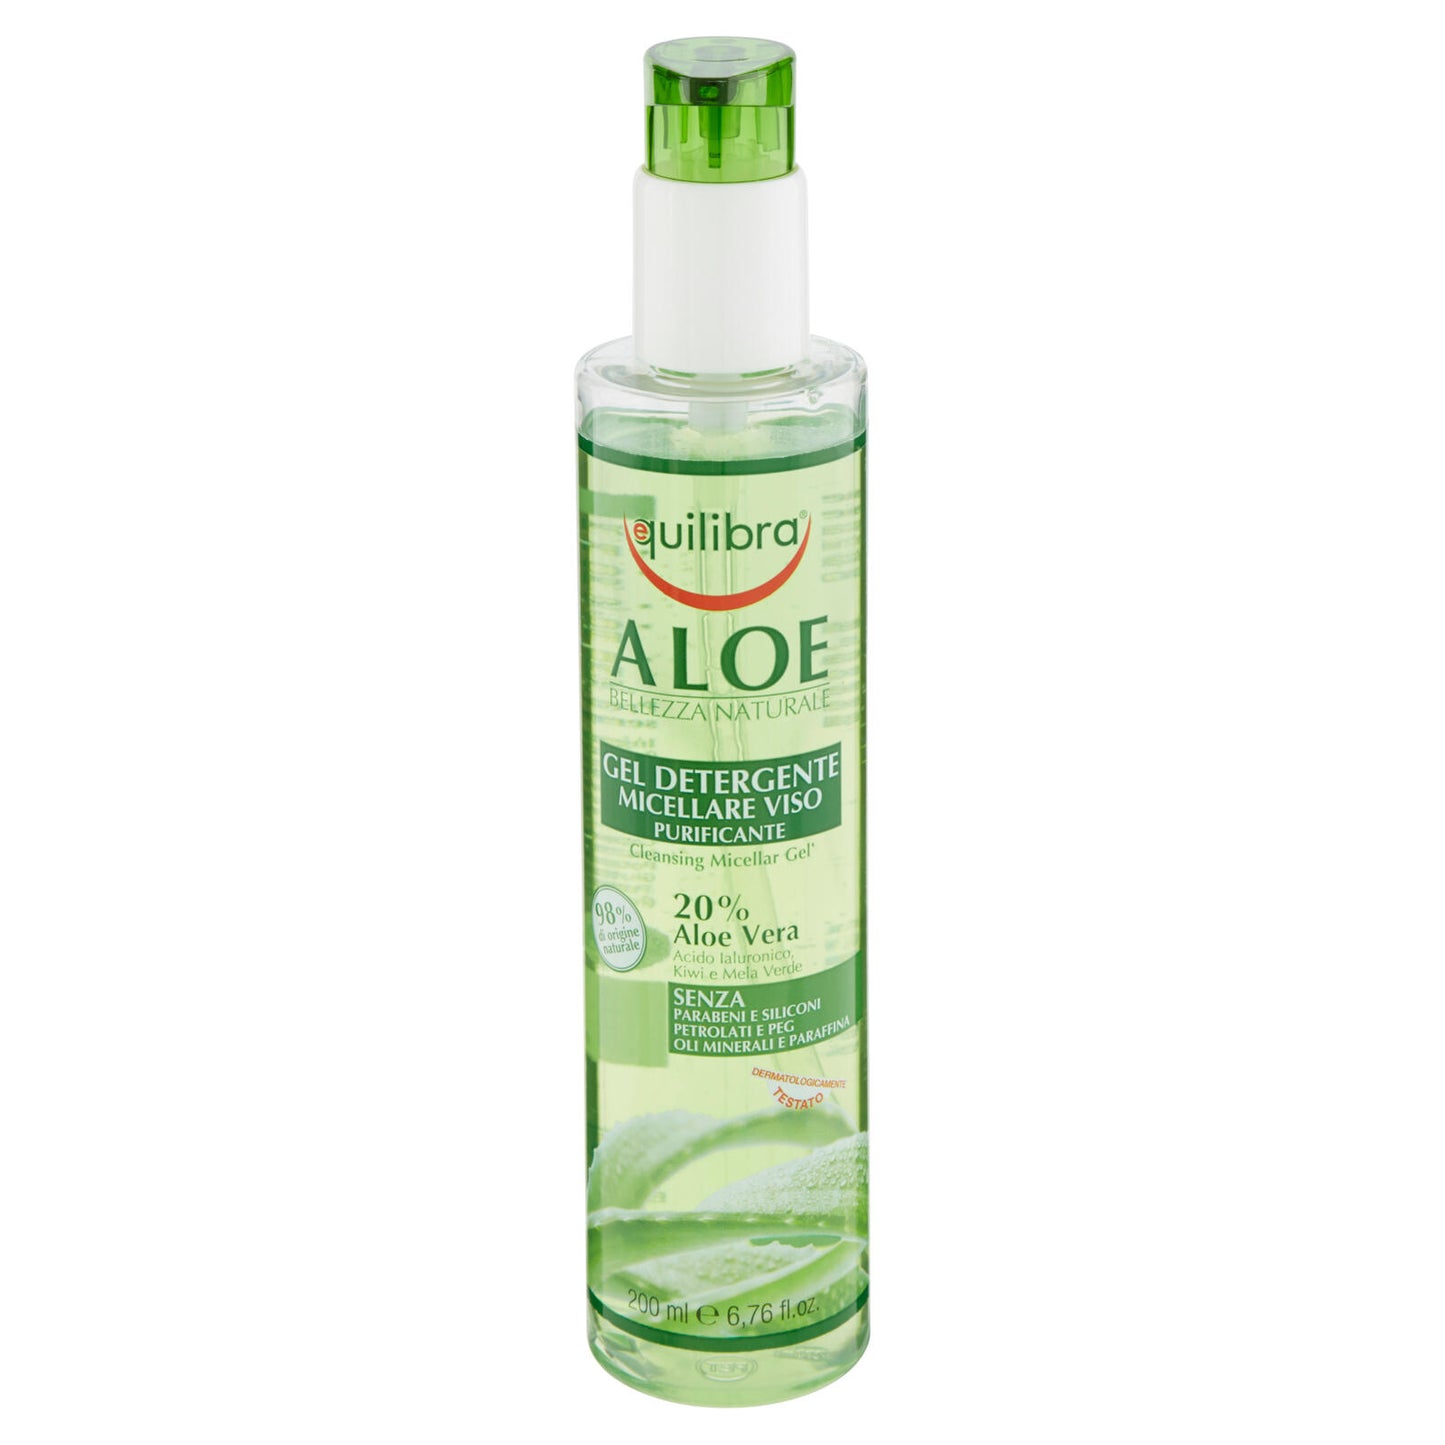 equilibra Aloe Gel Detergente Micellare Viso Purificante 200 ml